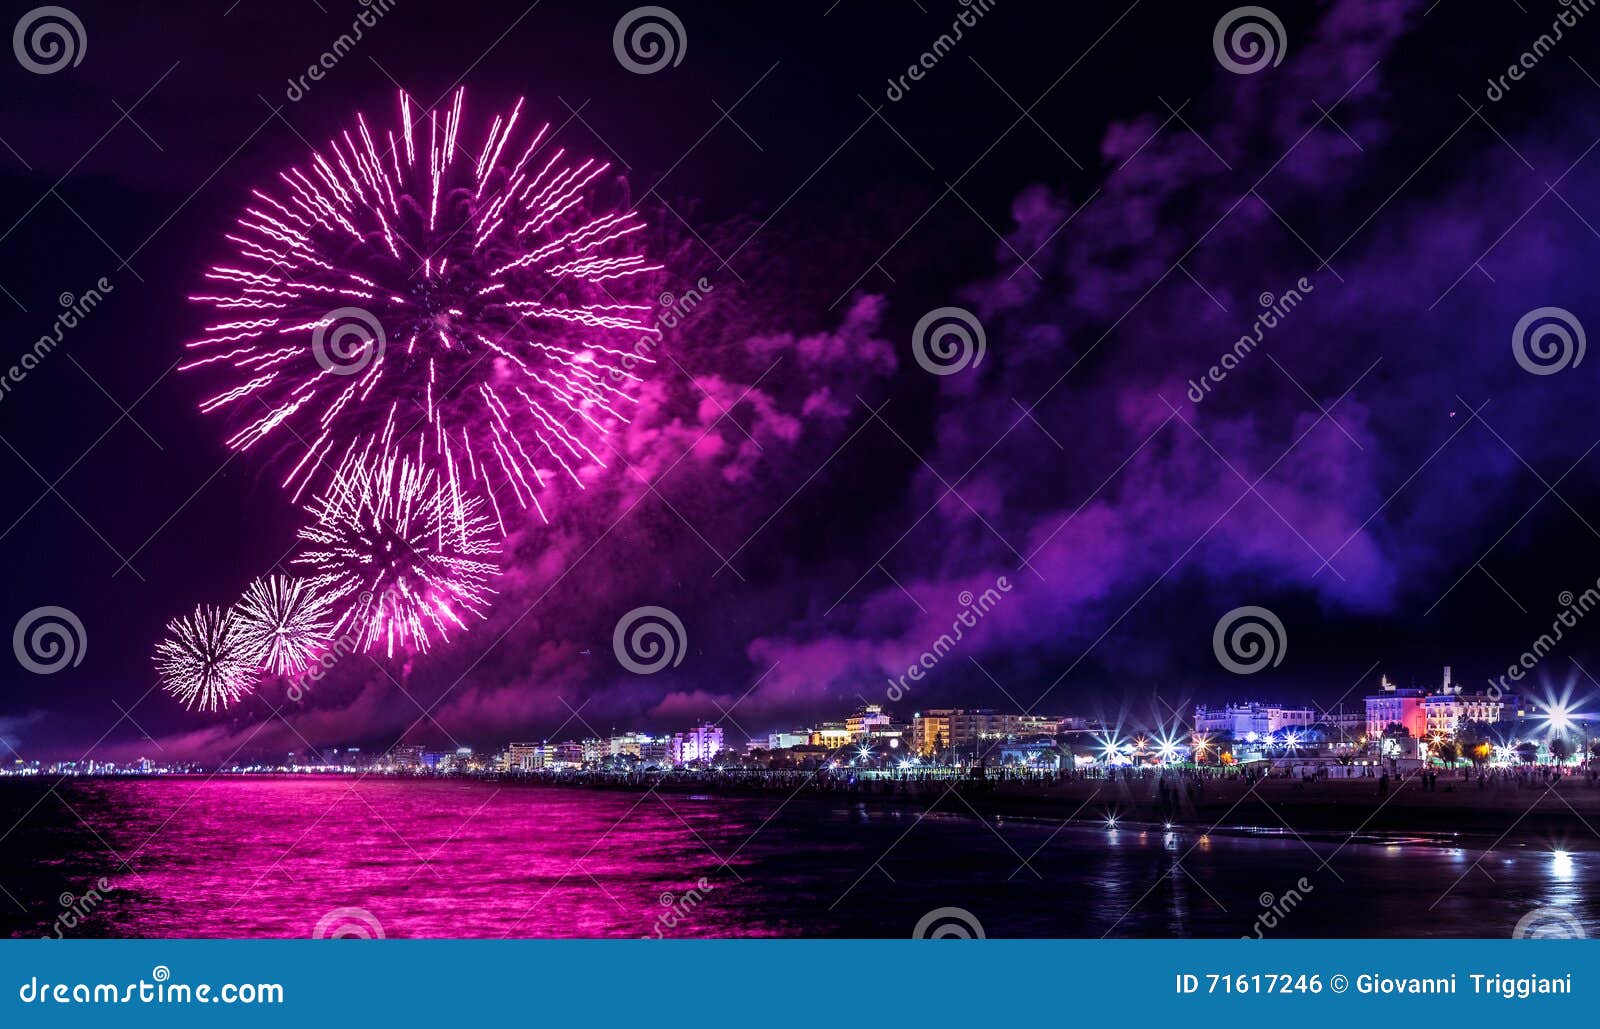 night fireworks explosion on seafront. rimini notte rosa